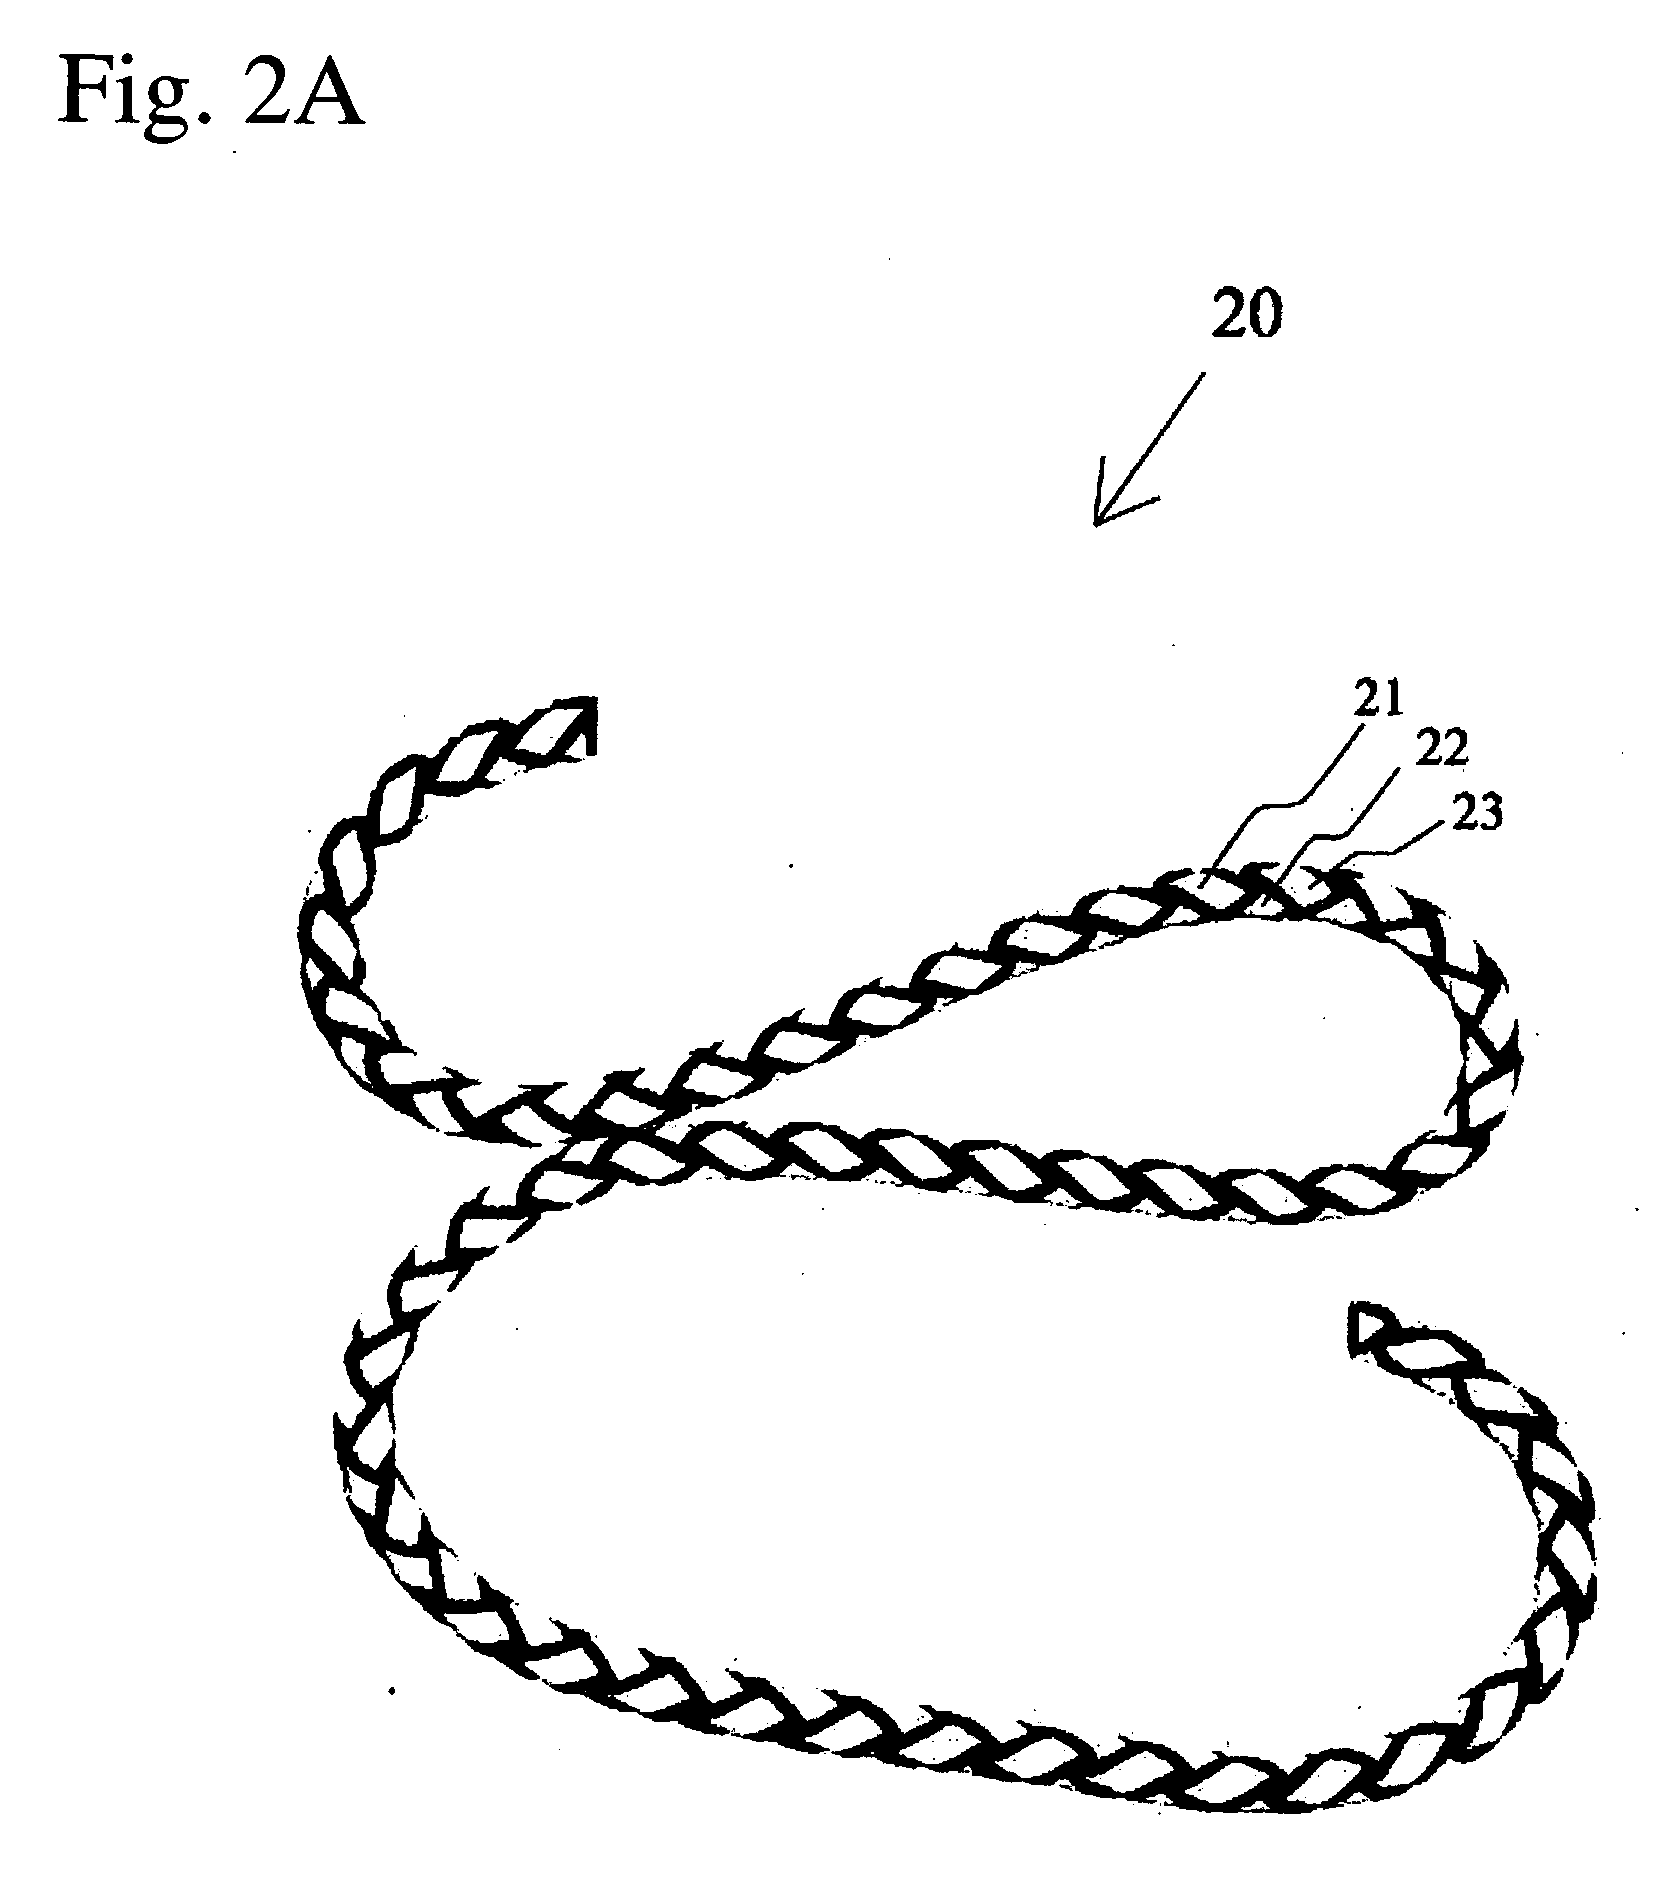 Abrasion resistant omnidirectionally reflective rope